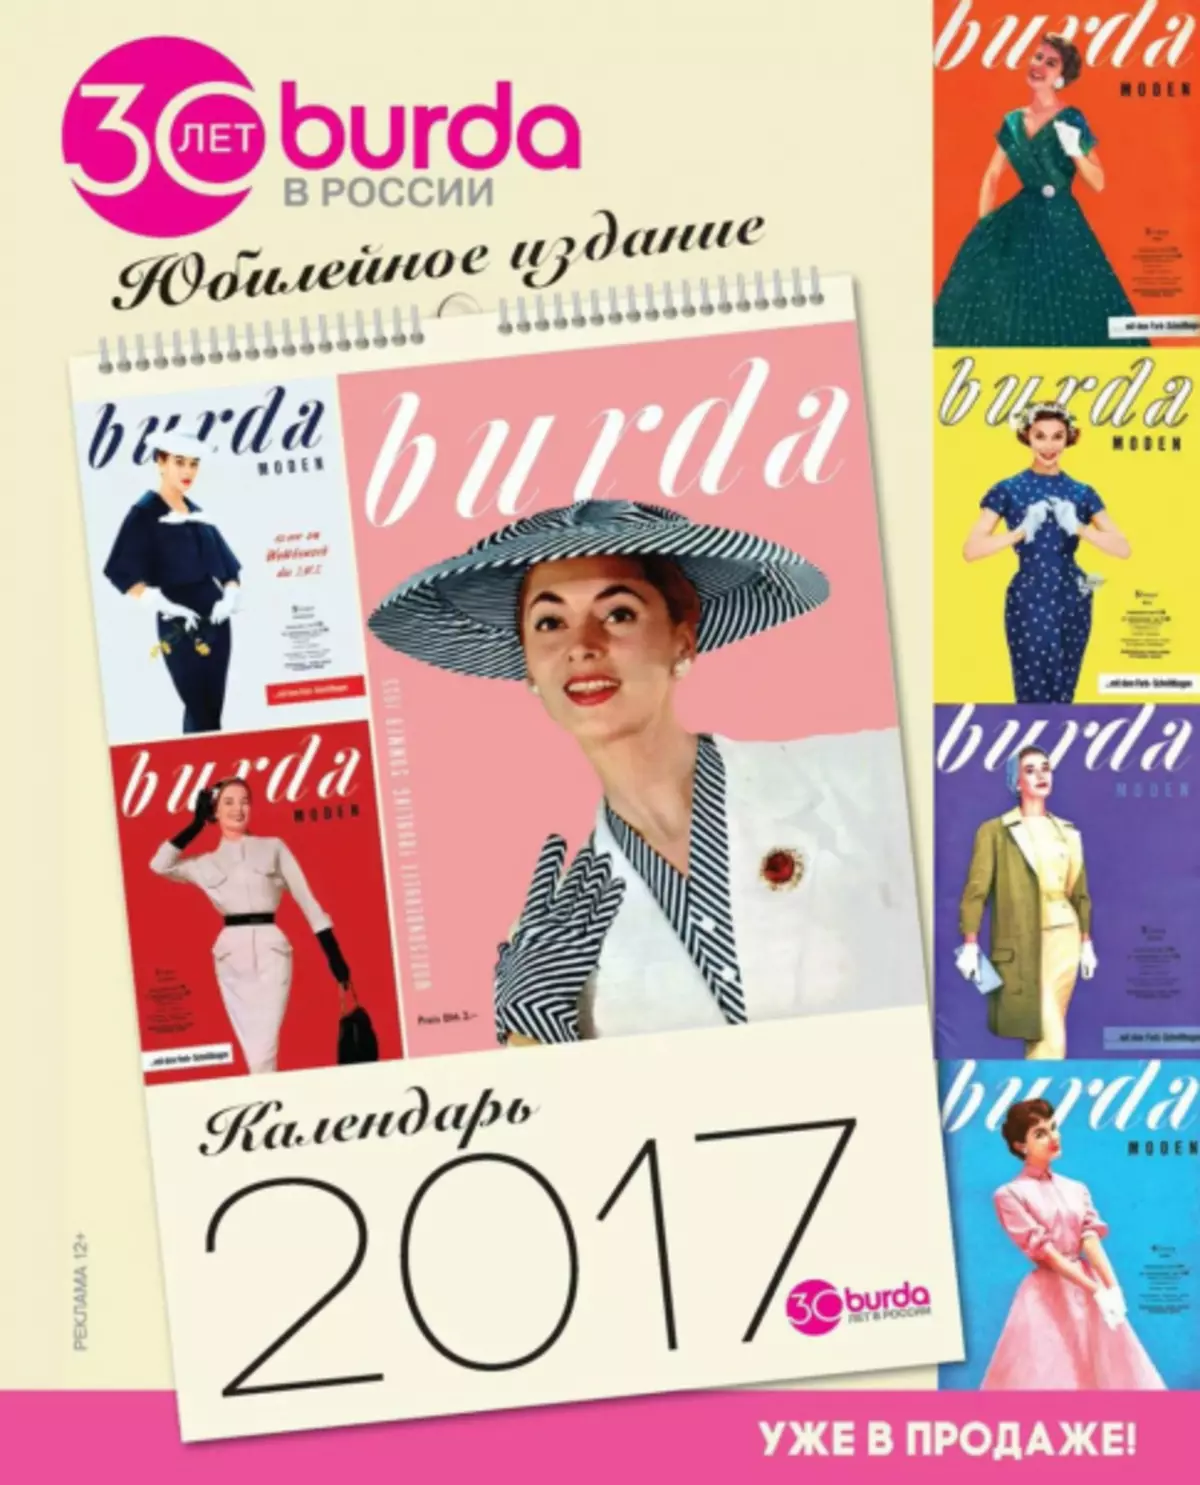 Burda. Special issue number 7 2019.